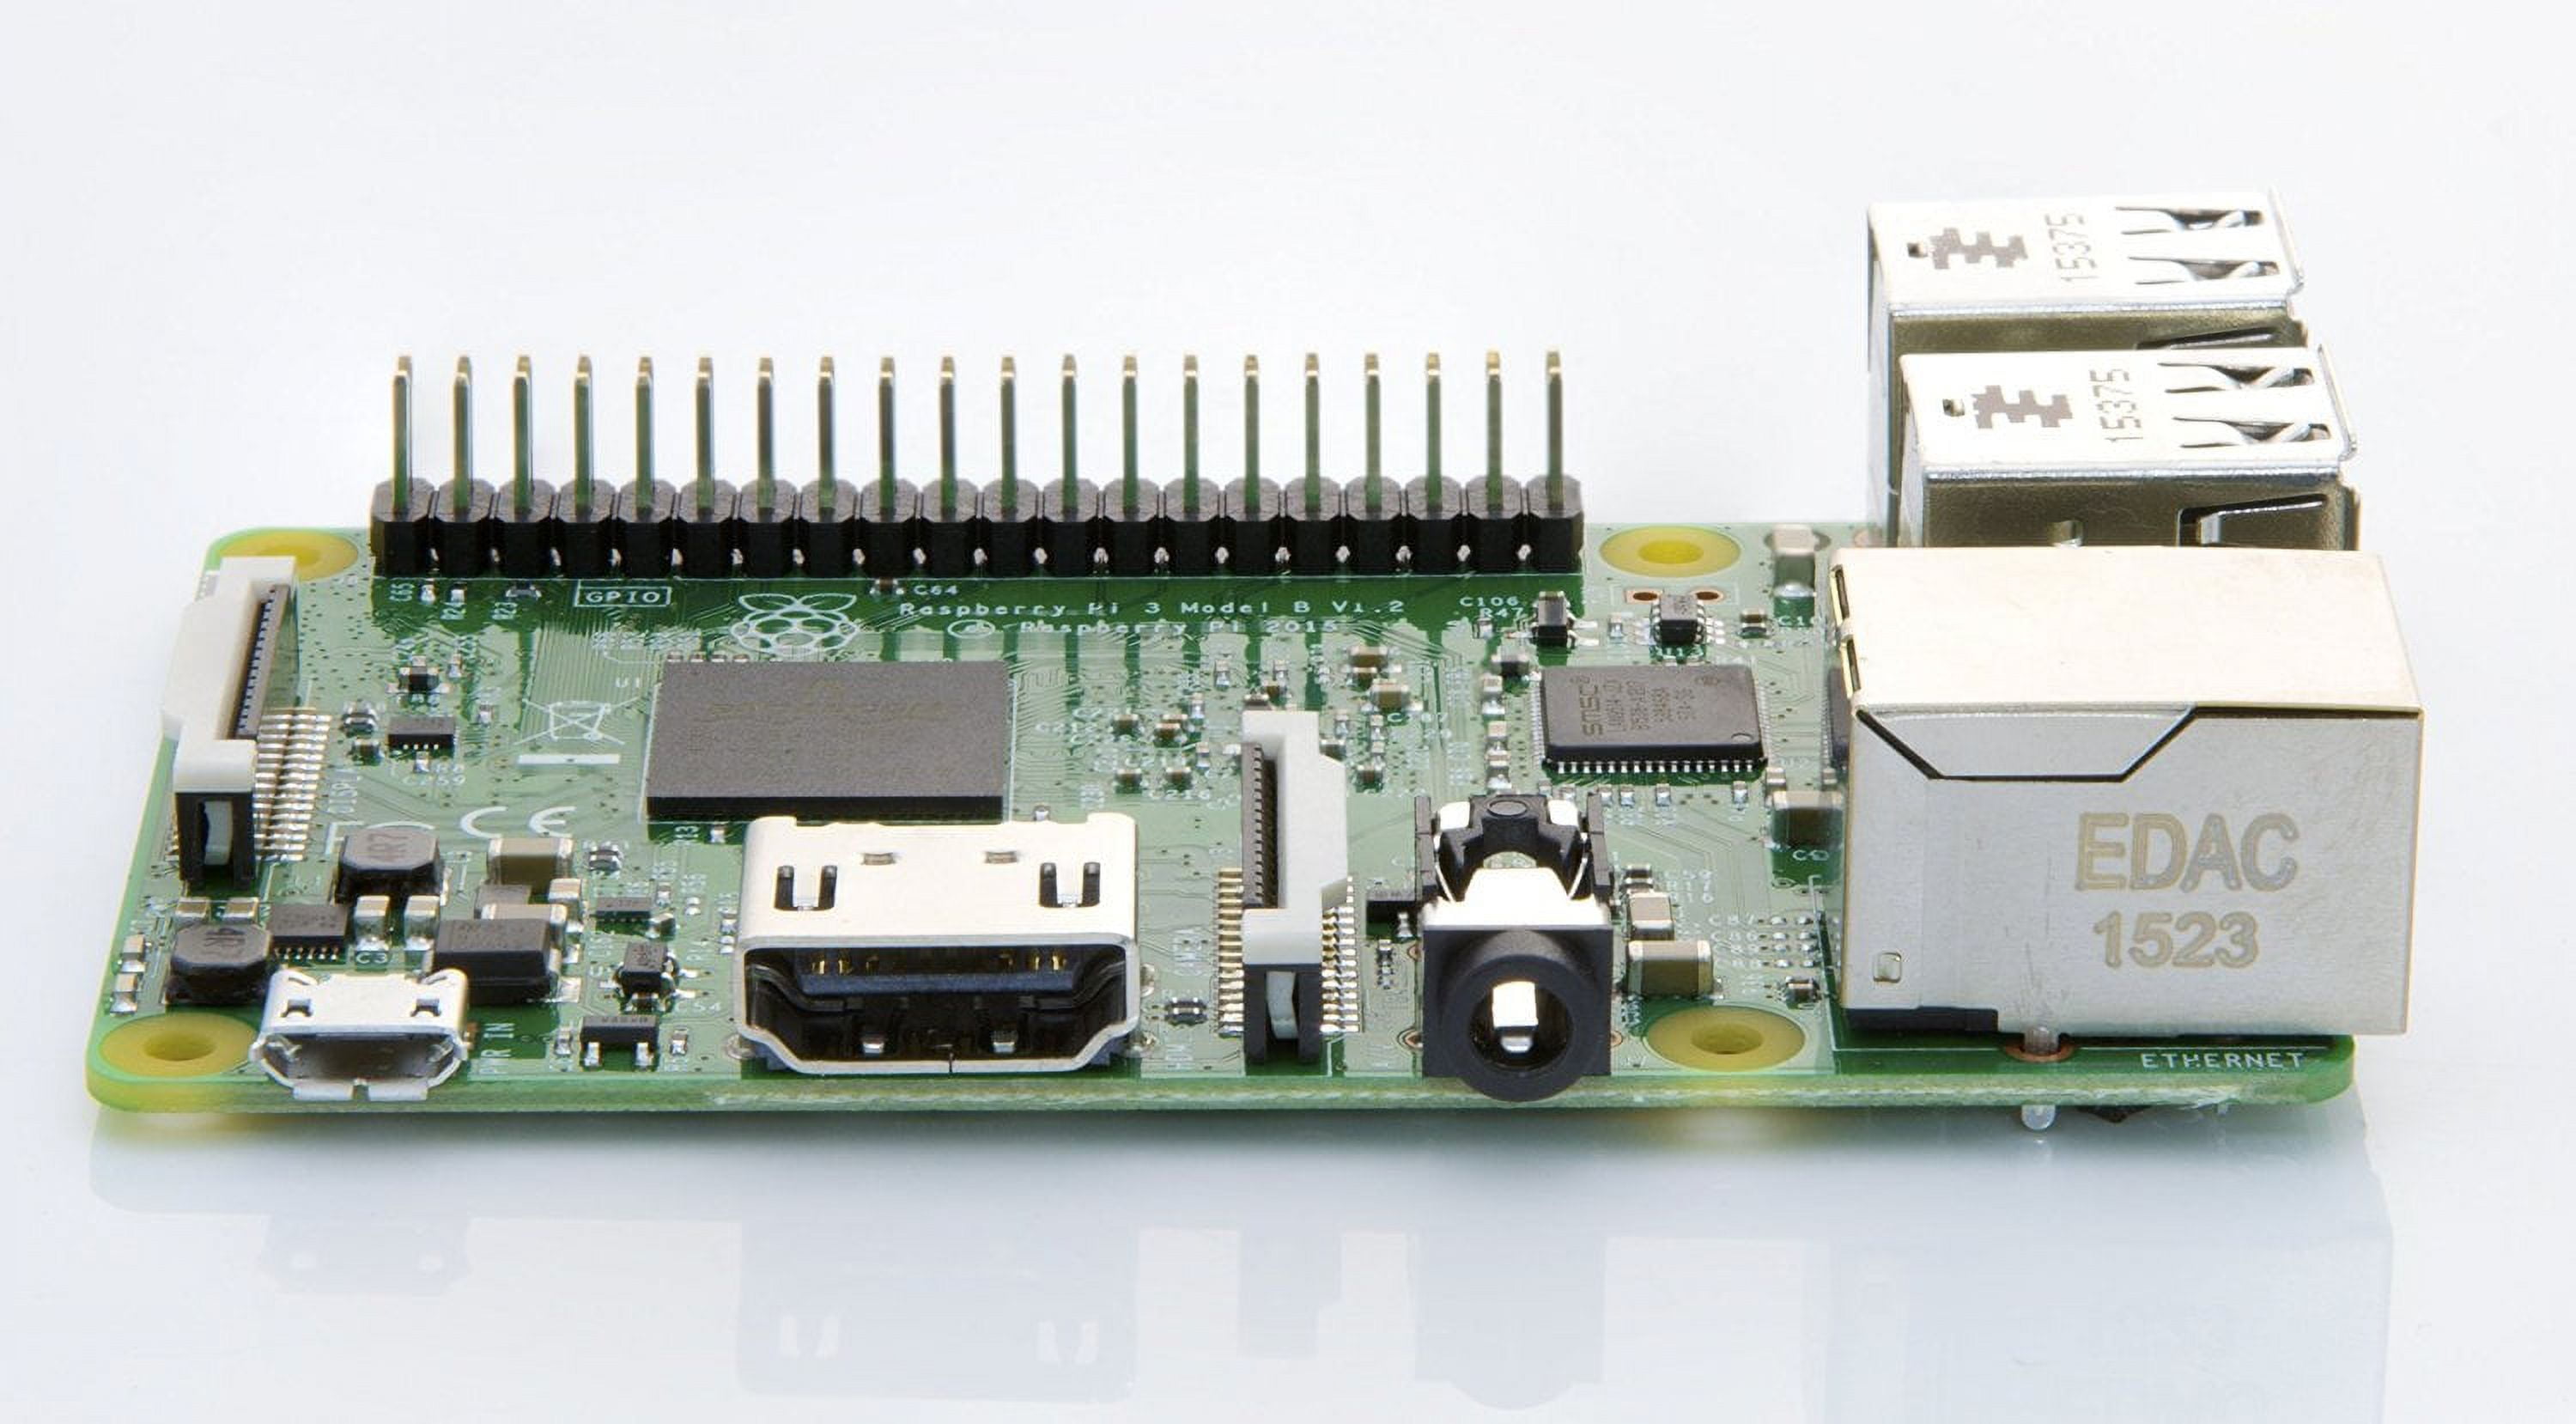 Raspberry Pi 3 Model B Motherboard 